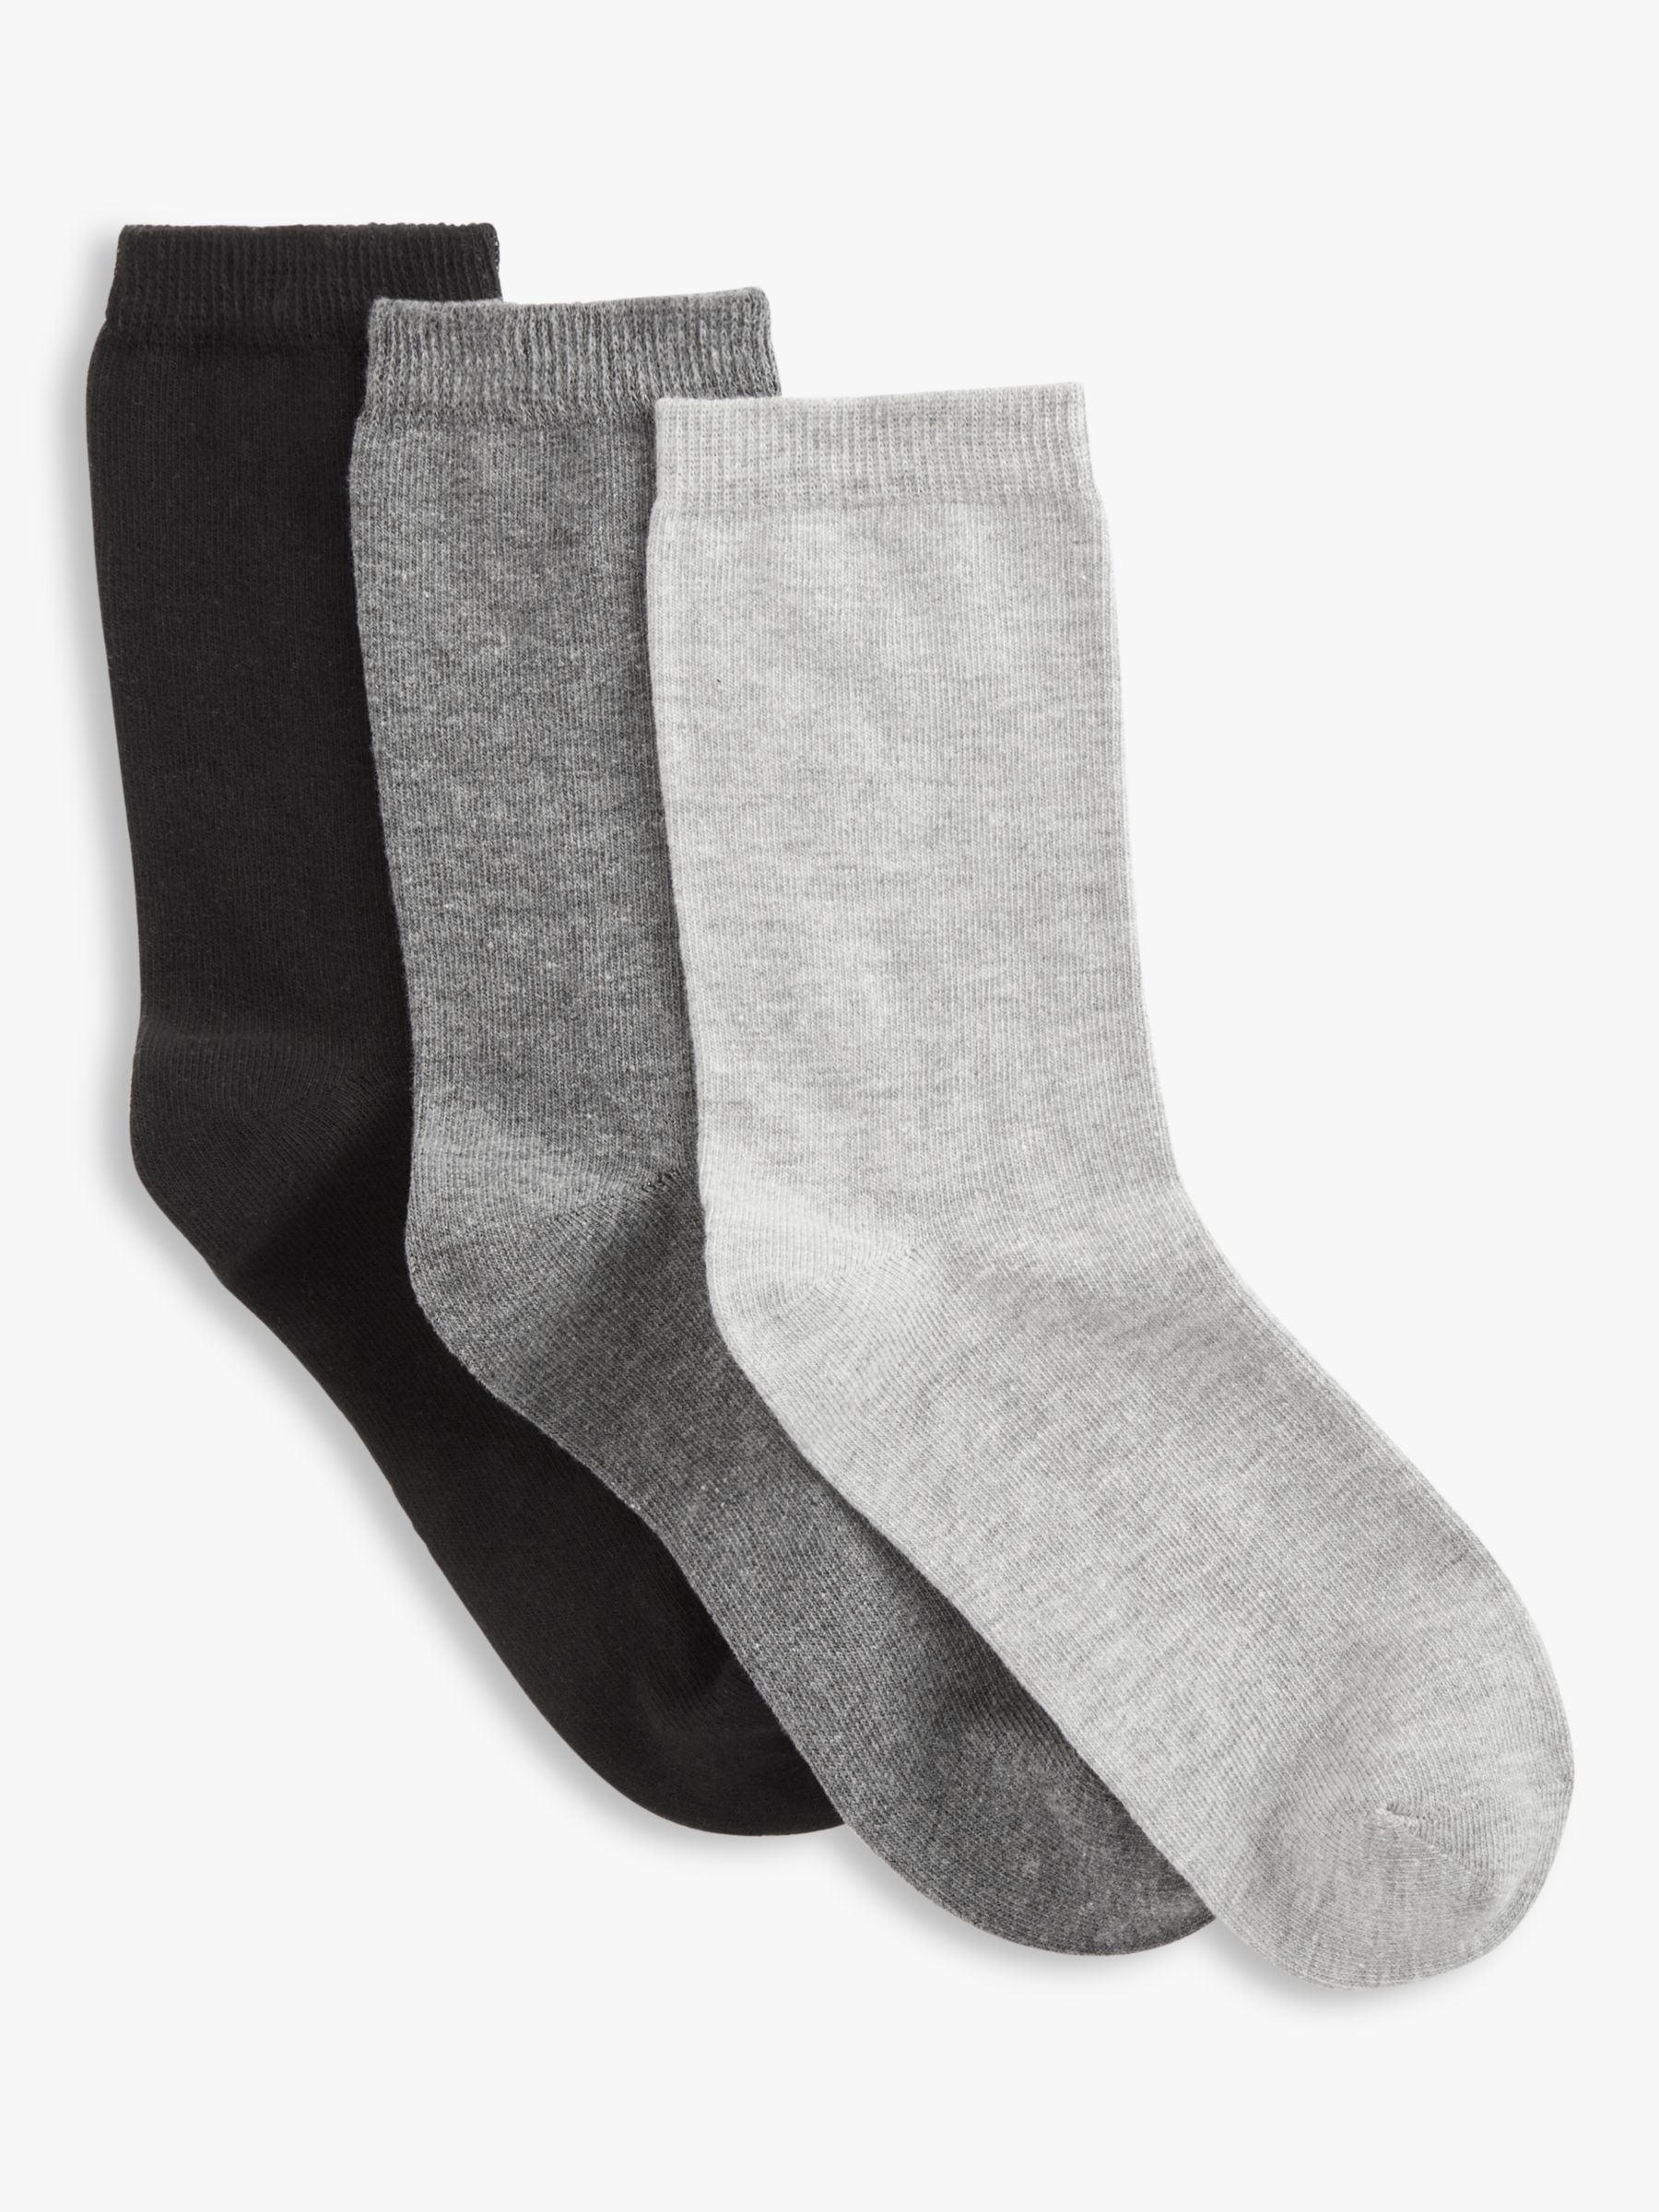 John Lewis Ankle Socks, Pack of 3, Mono at John Lewis & Partners